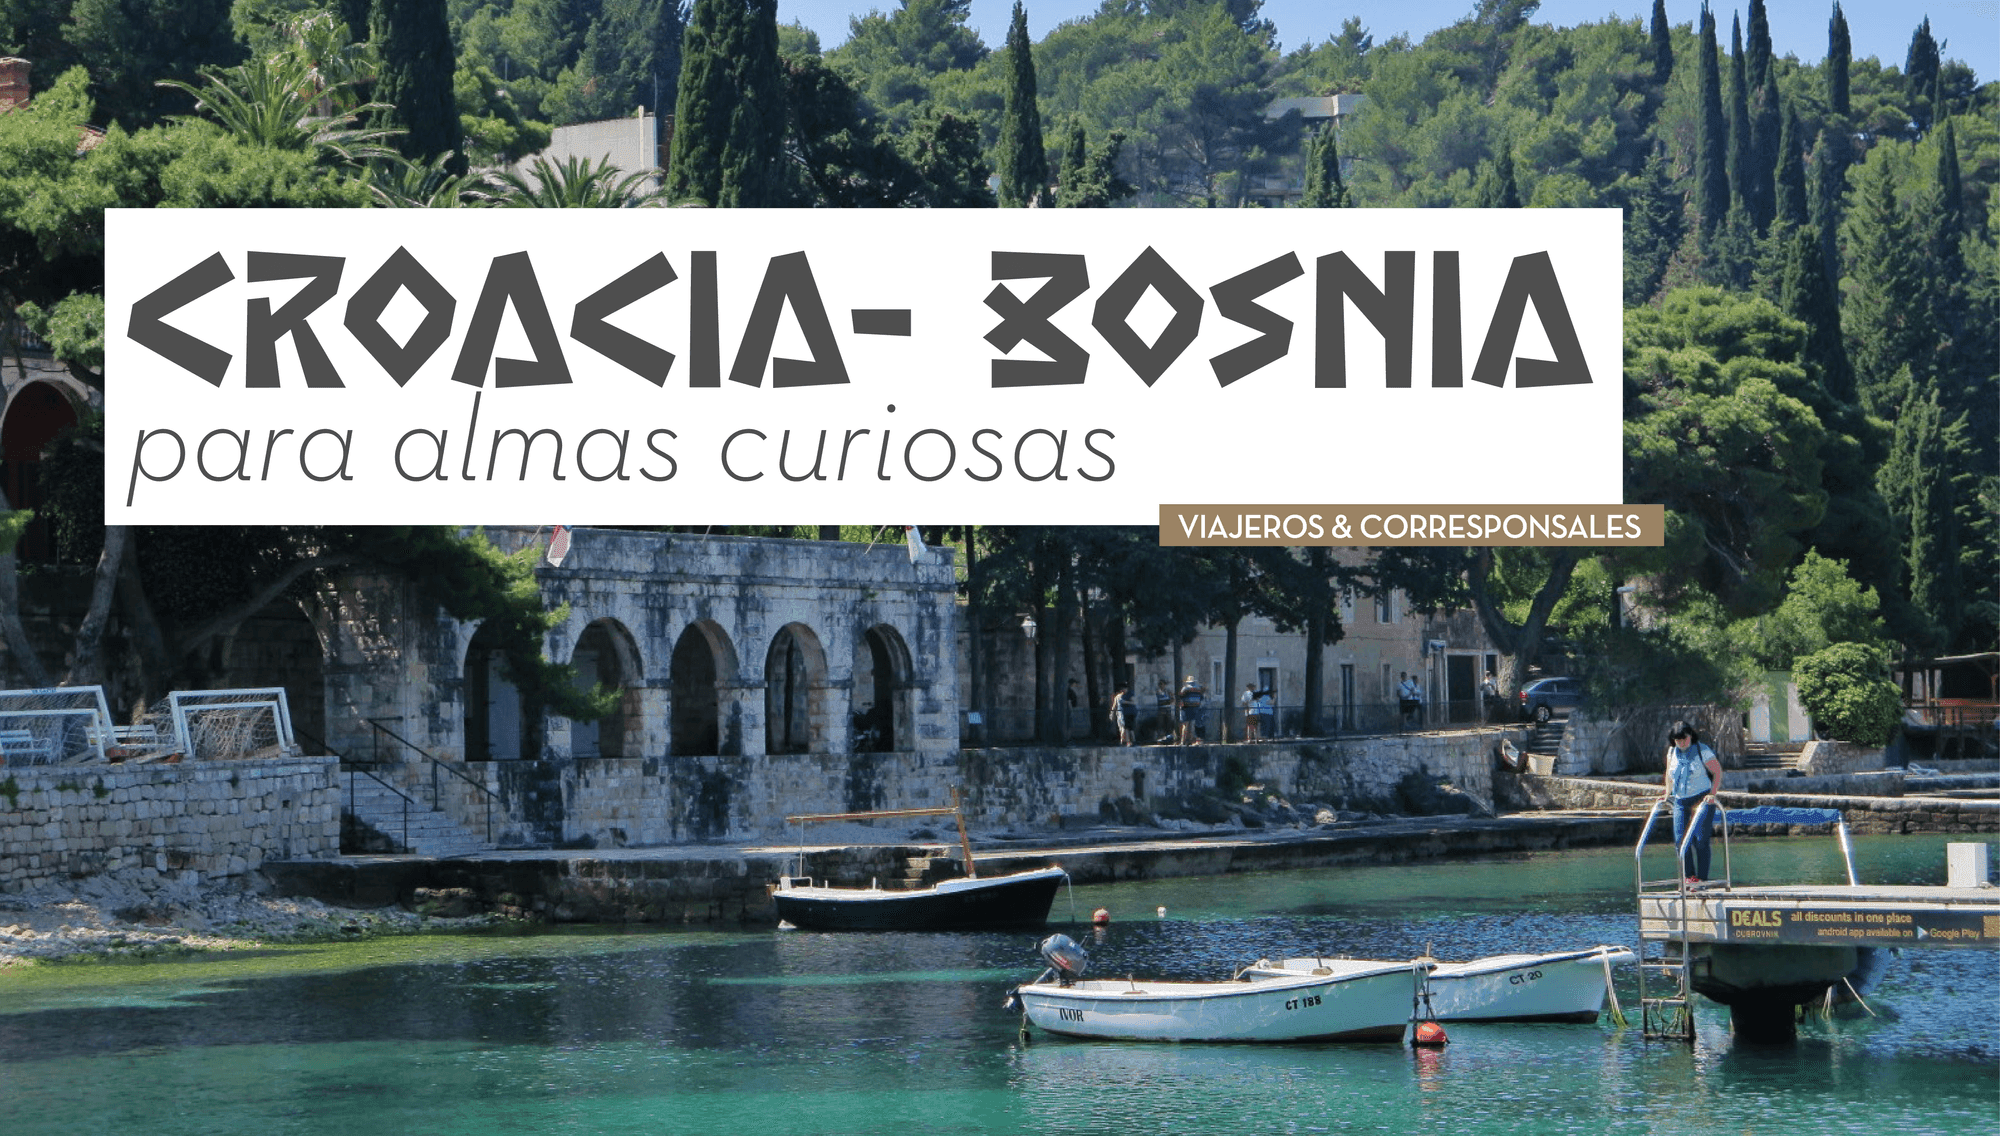 Croacia - Bosnia para almas curiosas